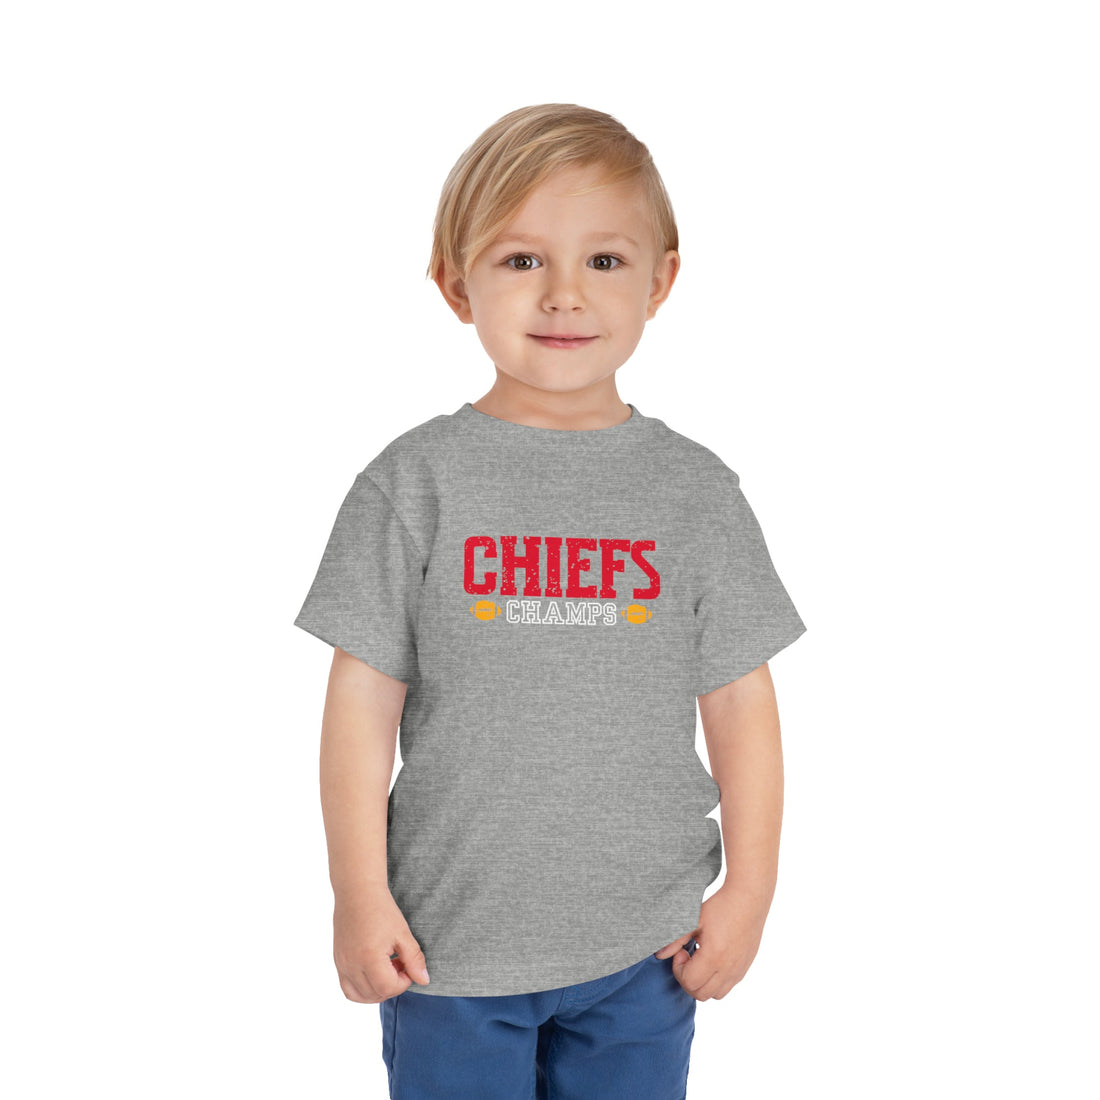 Chiefs Champs Toddler Short Sleeve Tee - Kids clothes - Positively Sassy - Chiefs Champs Toddler Short Sleeve Tee